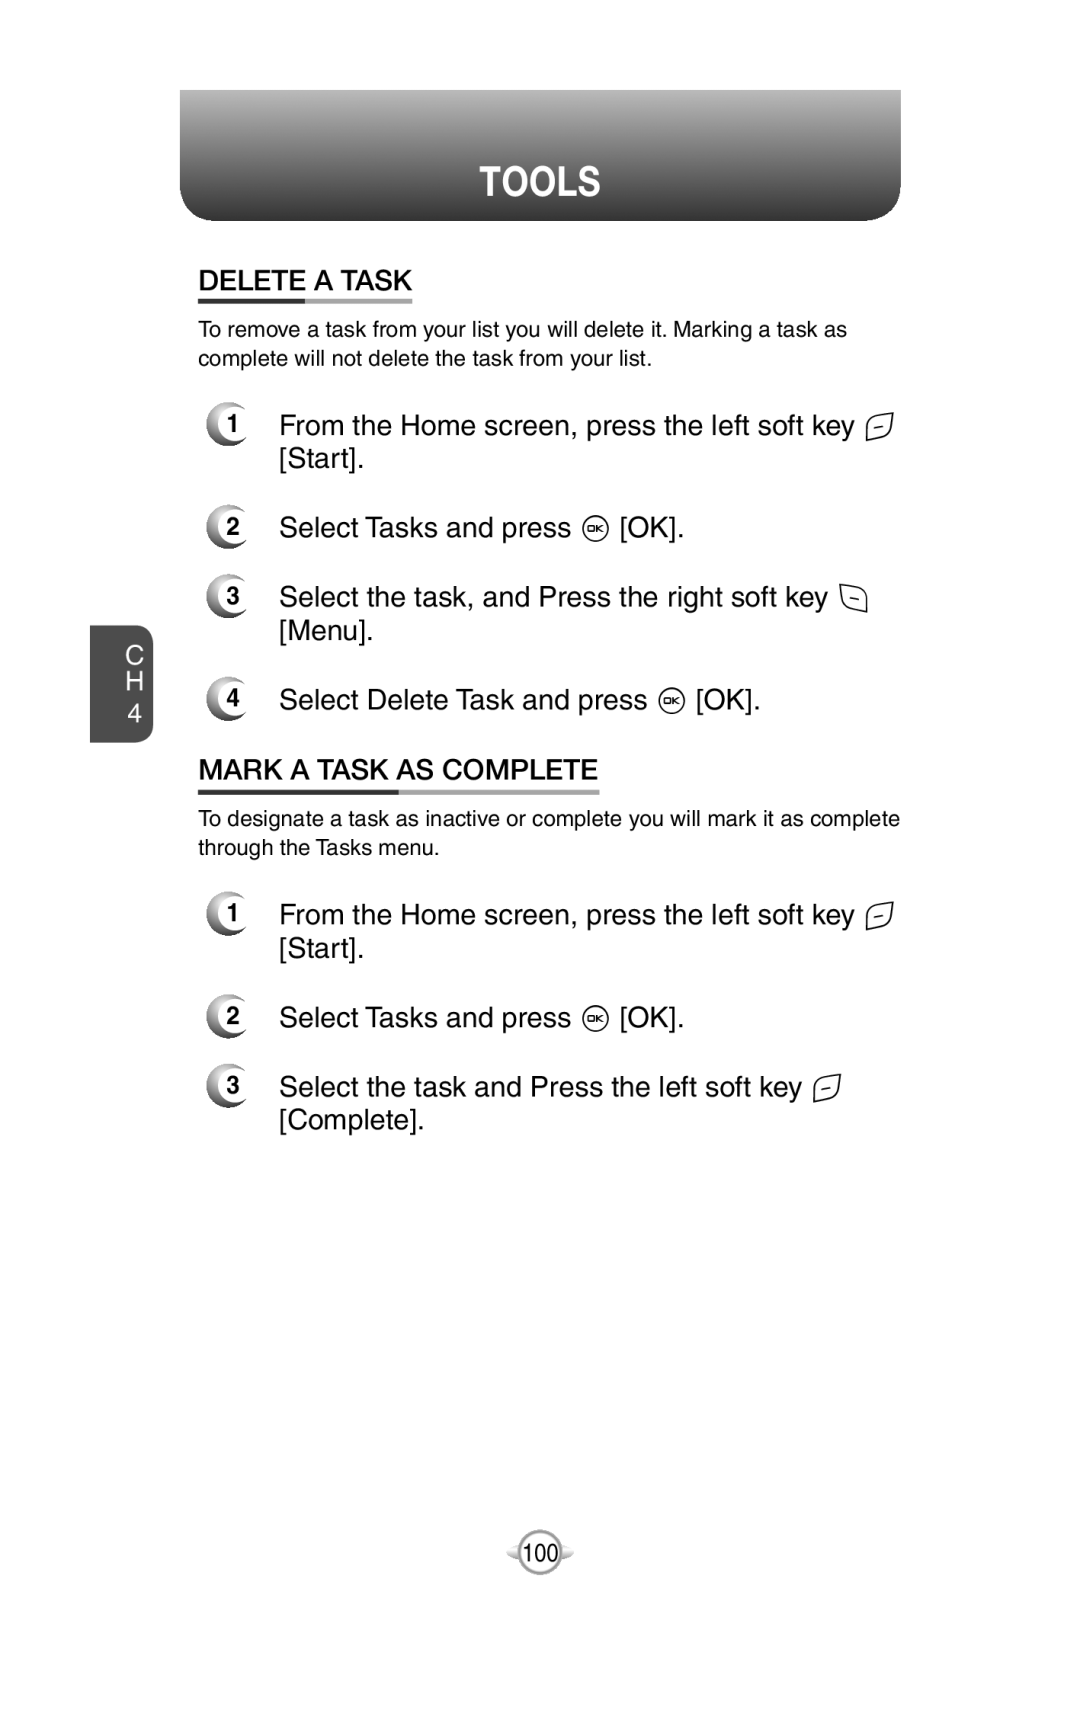 UTStarcom PN-820 user manual Menu, Select Delete Task and press O OK, Tools, Delete A Task 